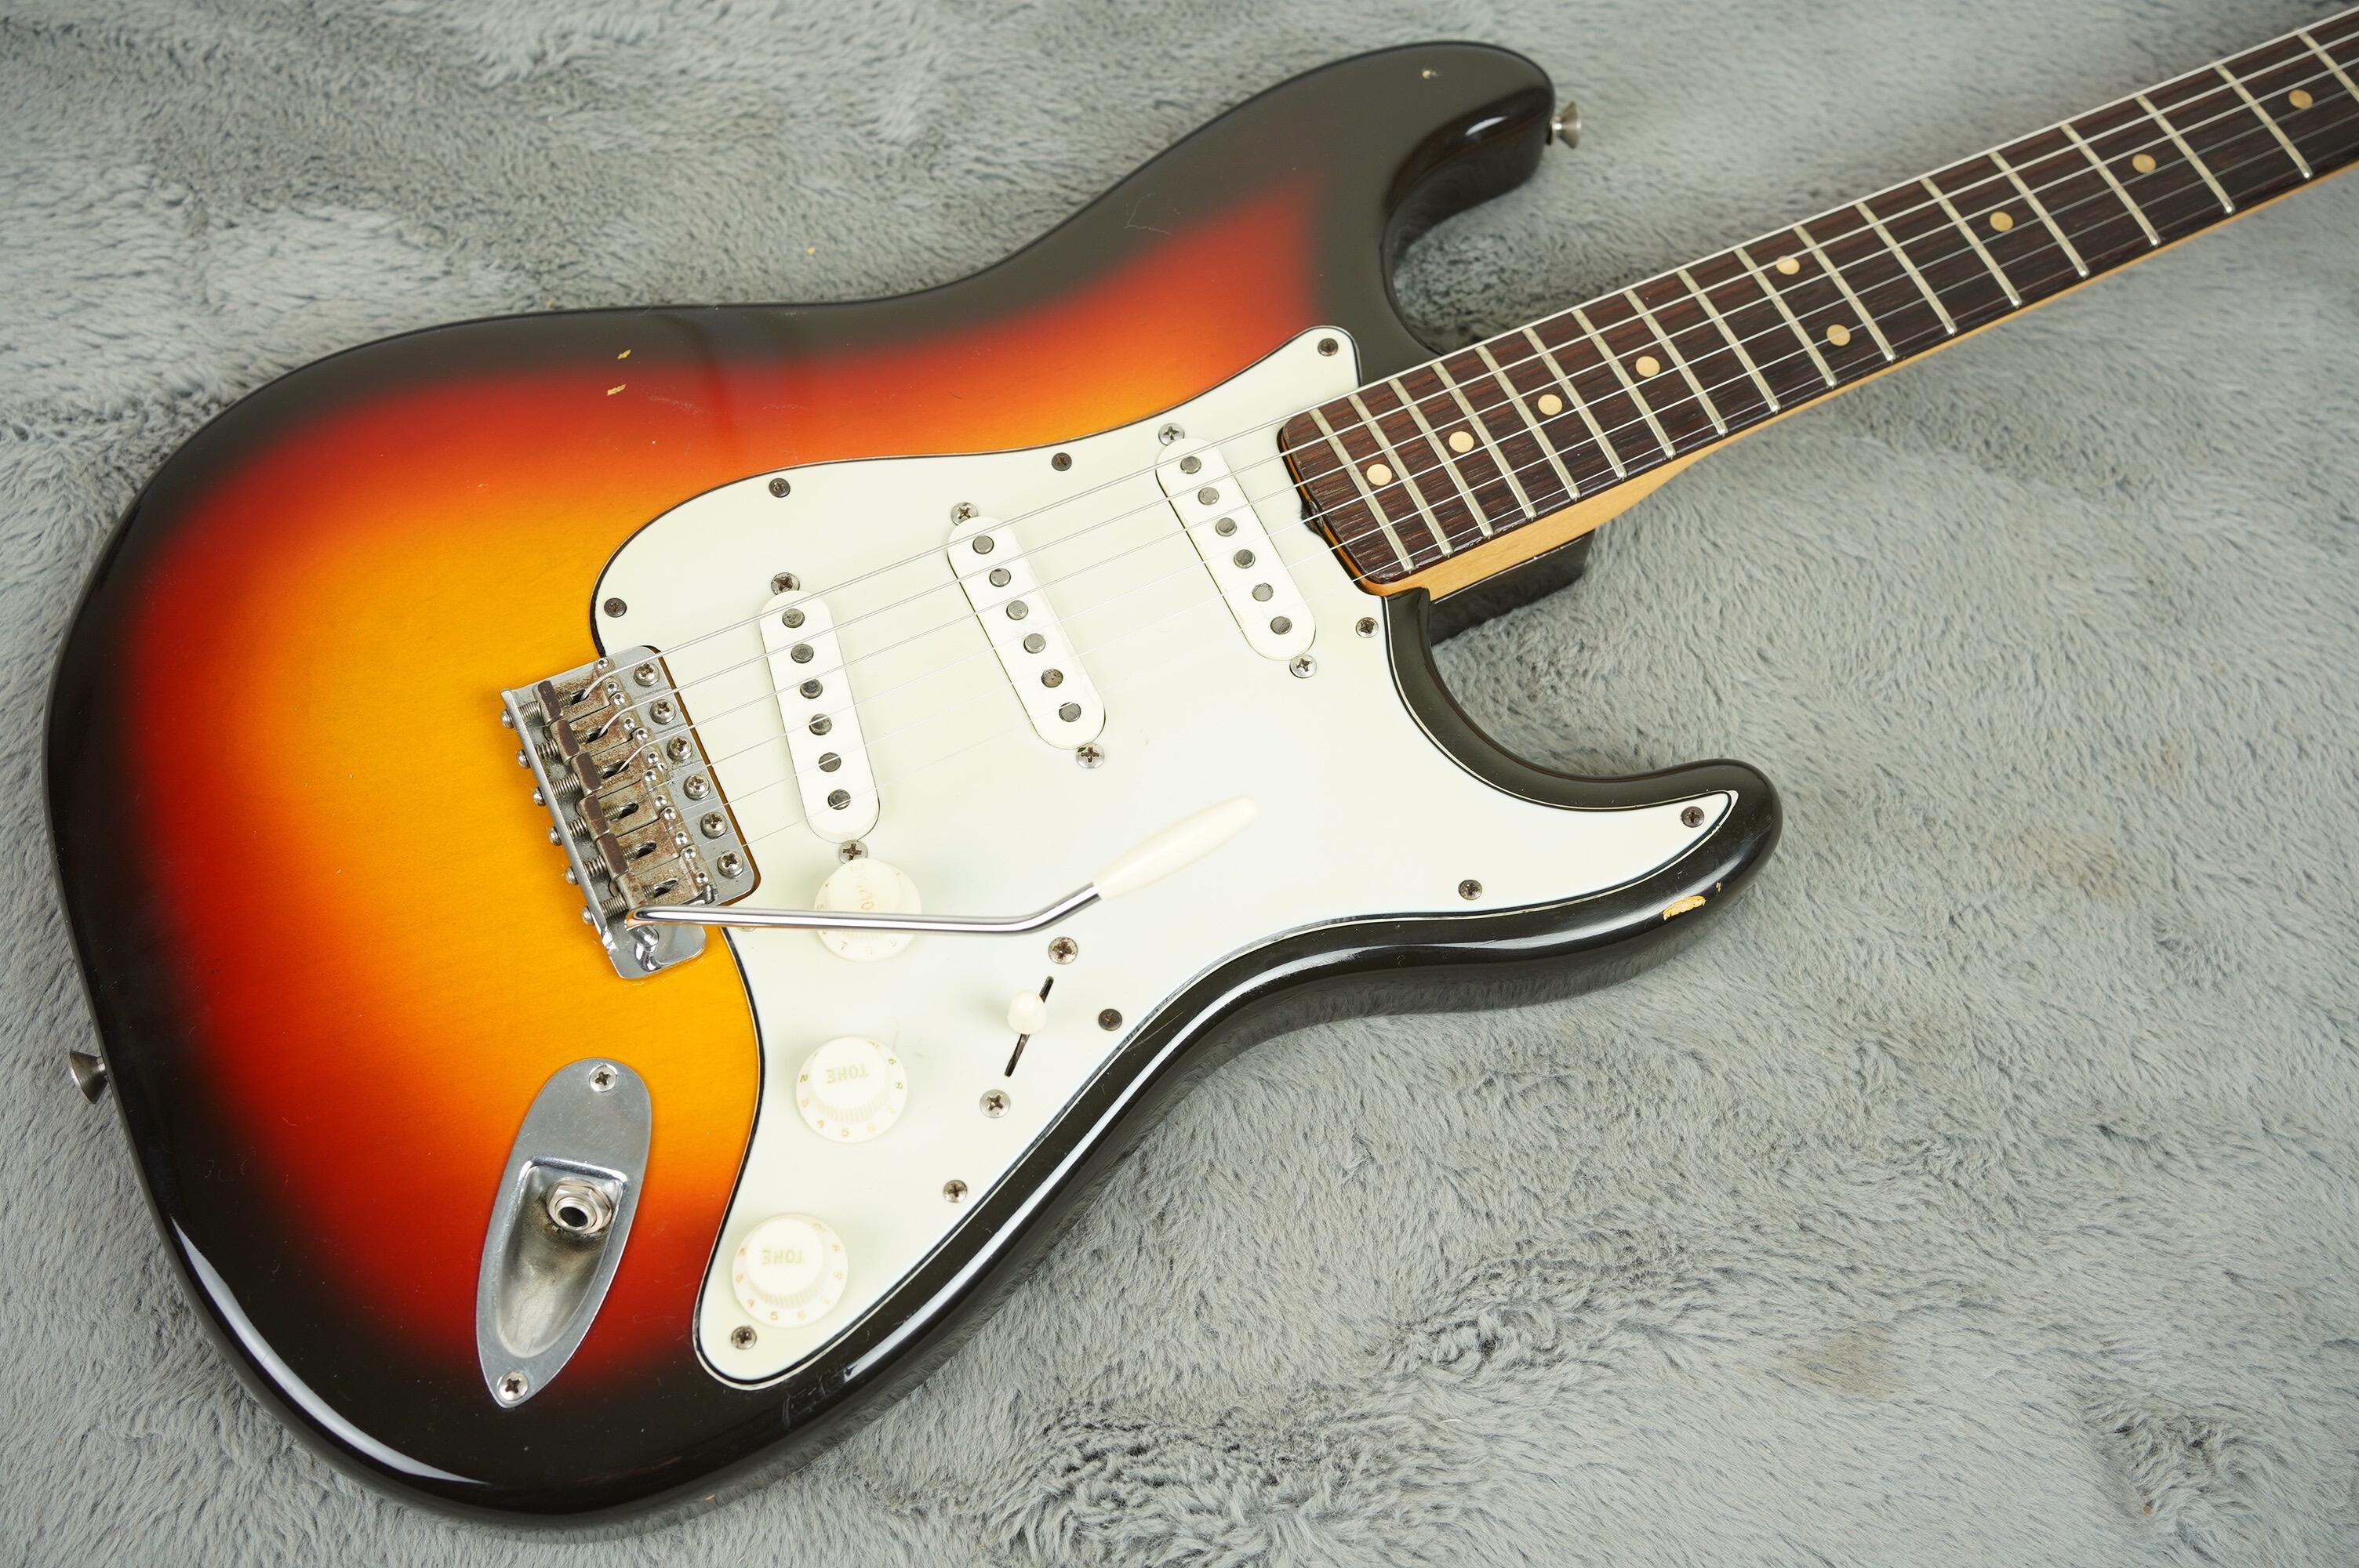 1962 Fender Stratocaster refin